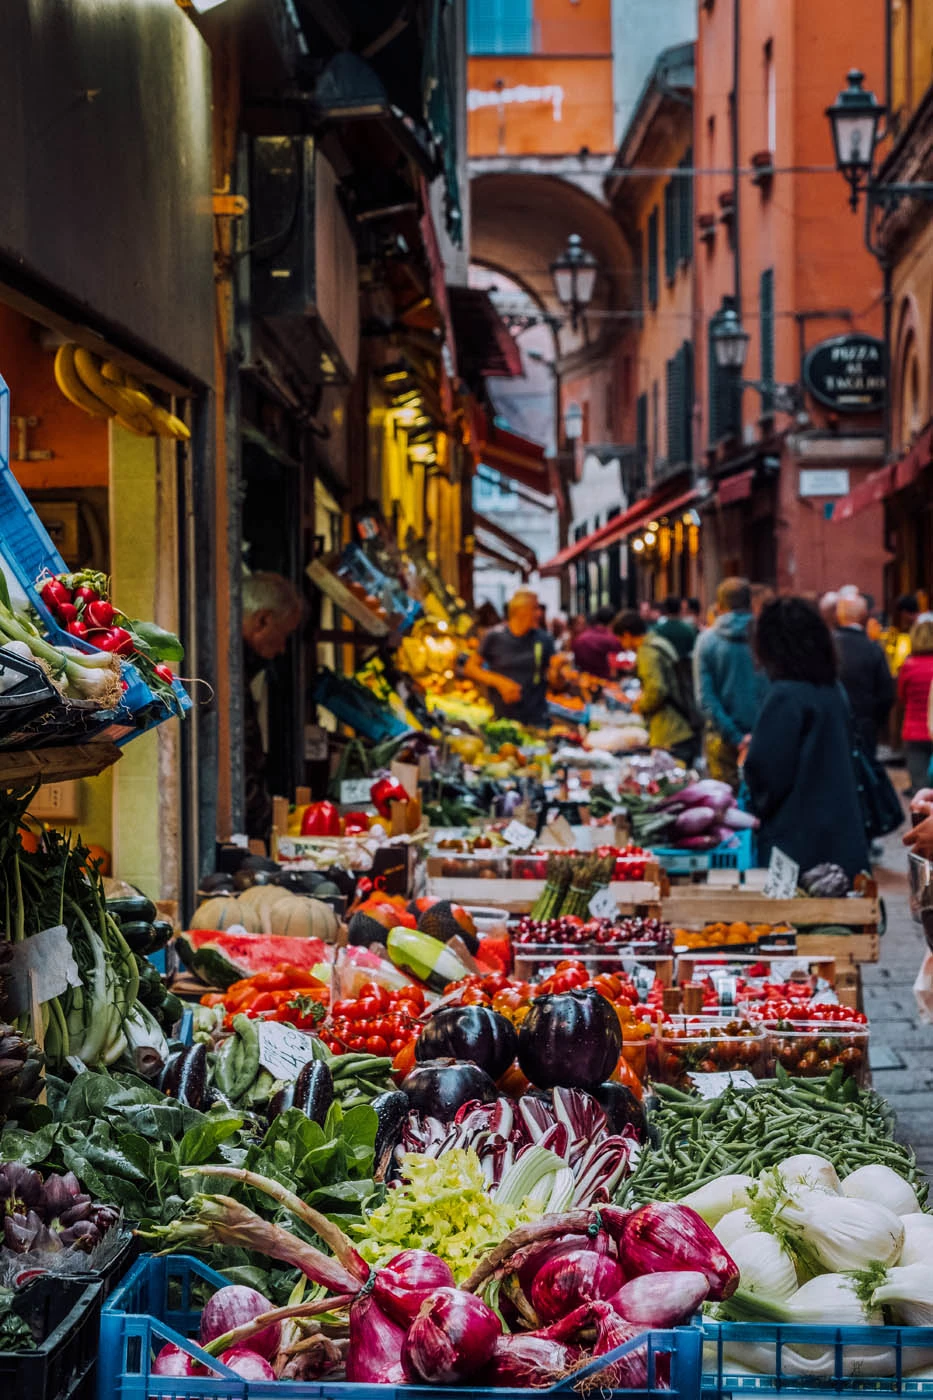 What to Do in Bologna in a Day - Quadrilatero Market on Via Pescherie Vecchie